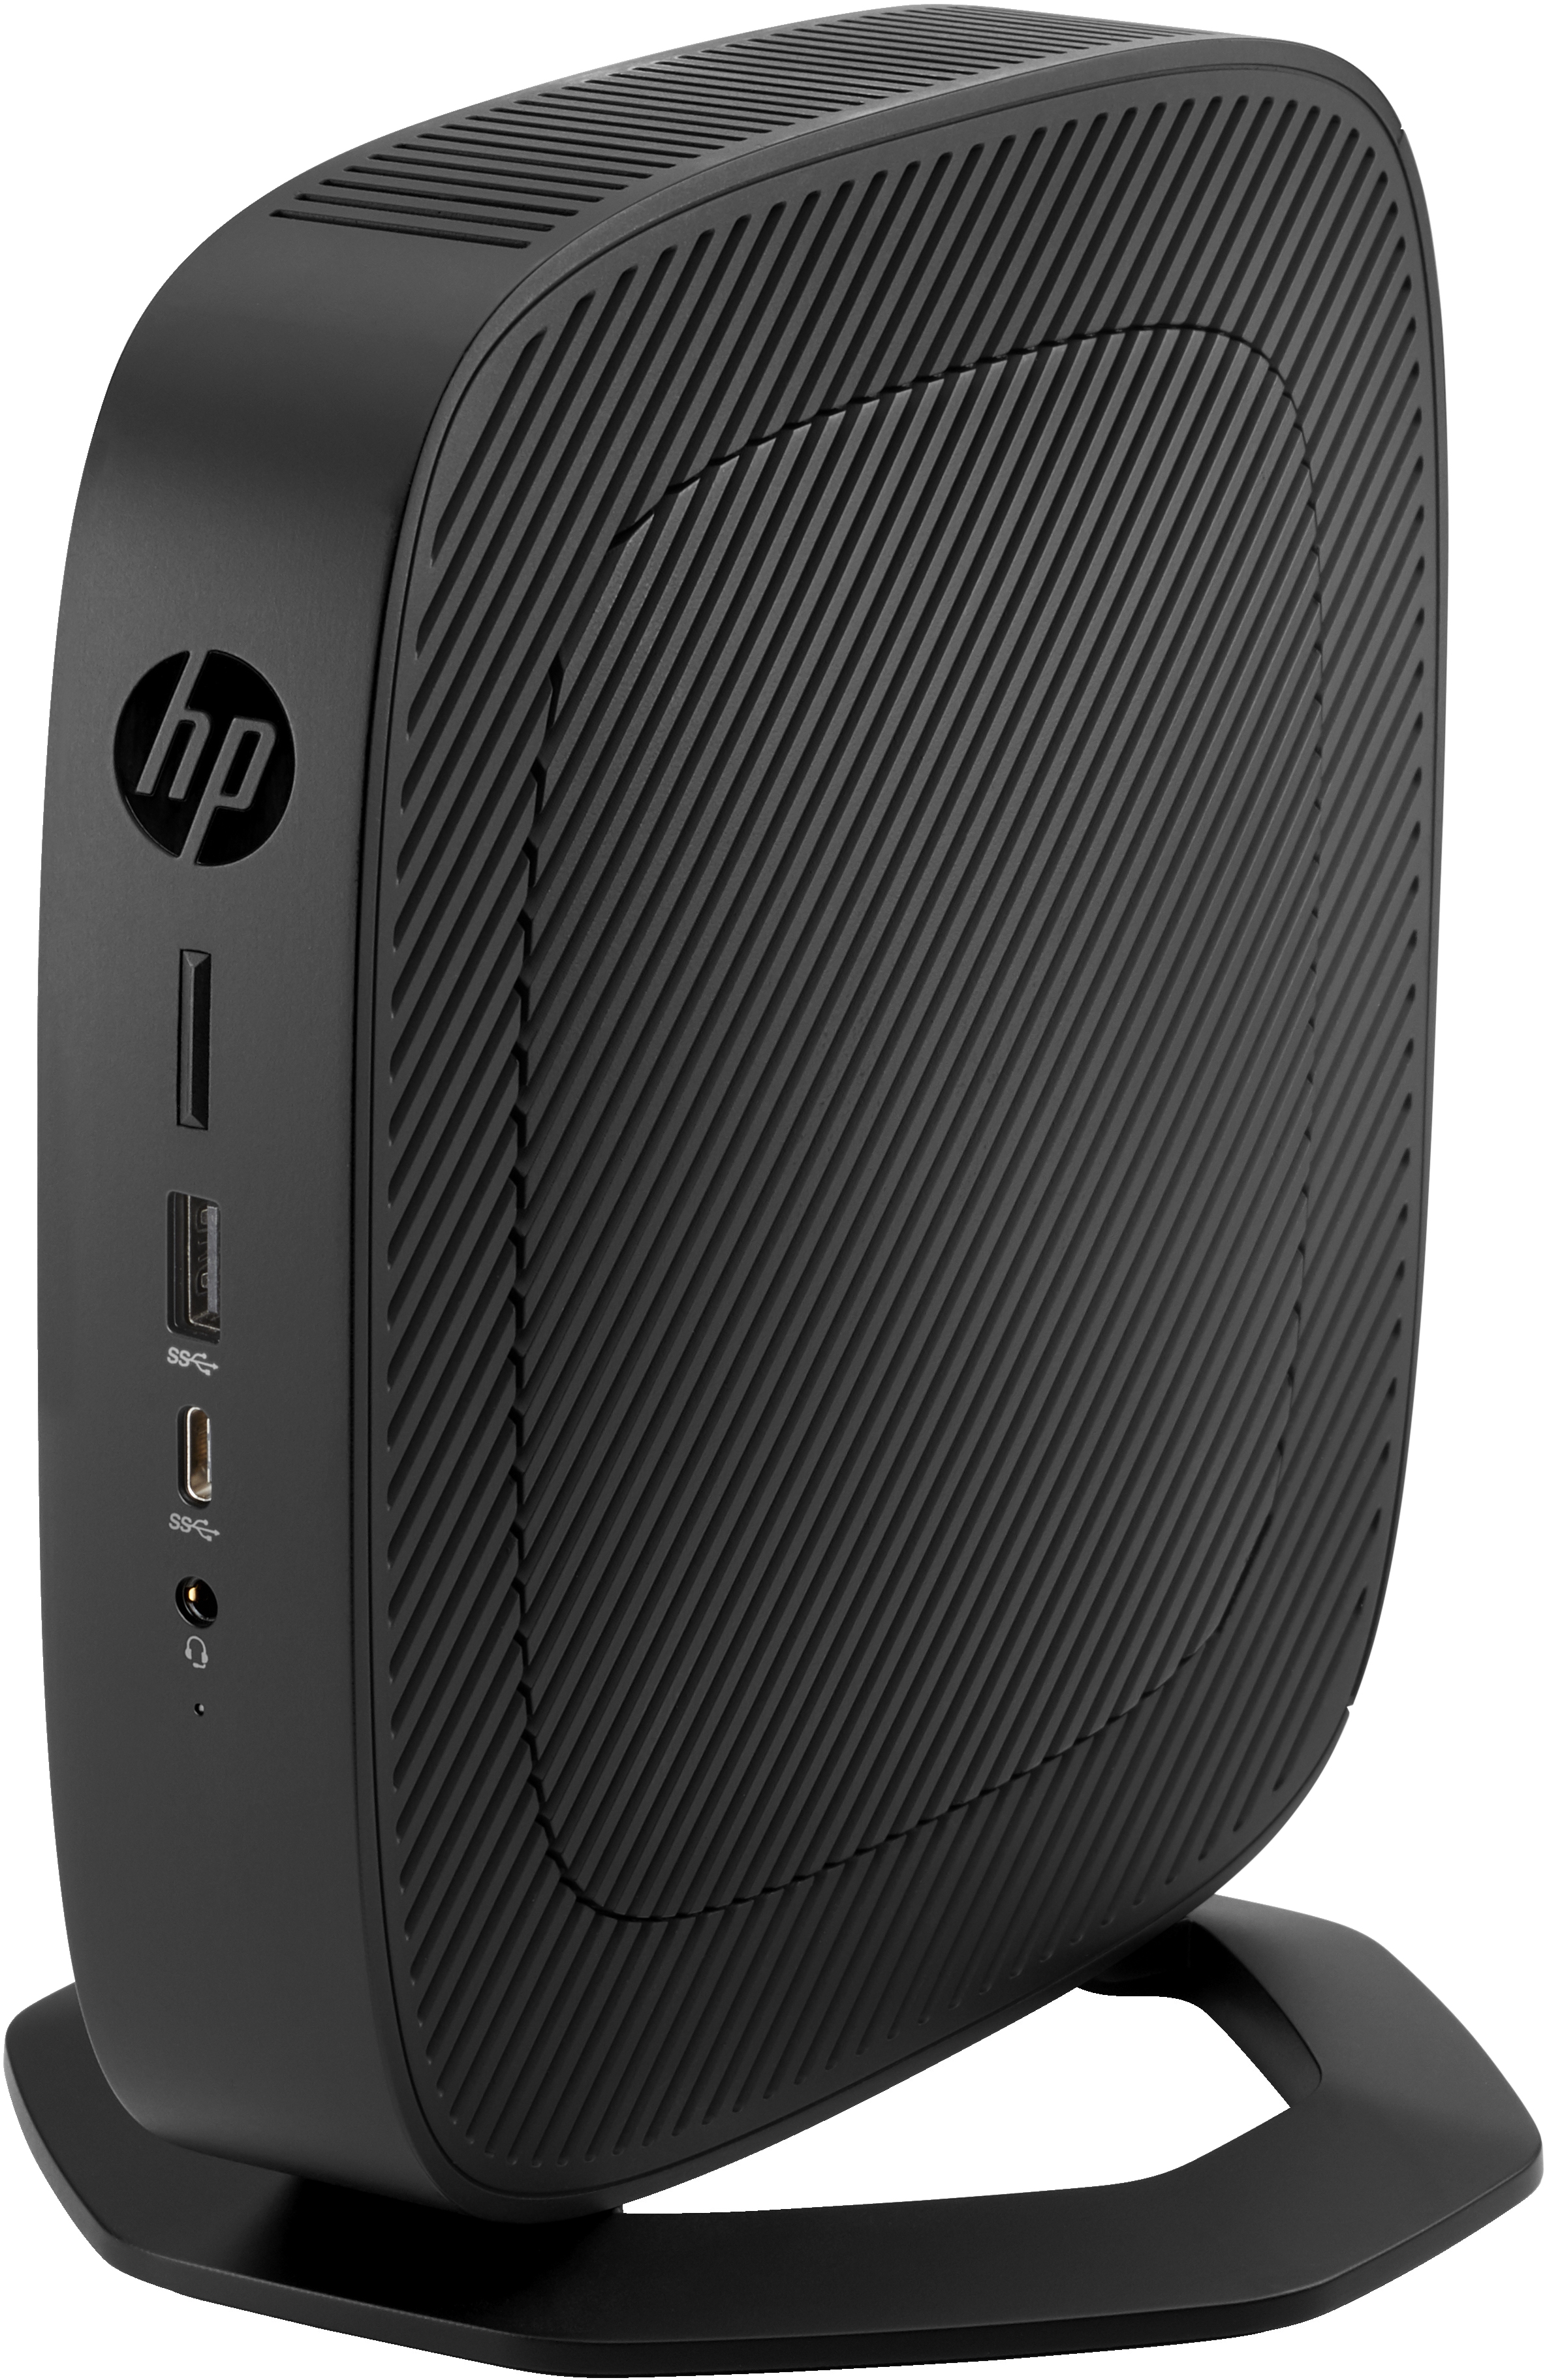 HP t540 1,5 GHz Windows 10 IoT Enterprise 1,4 kg Svart R1305G